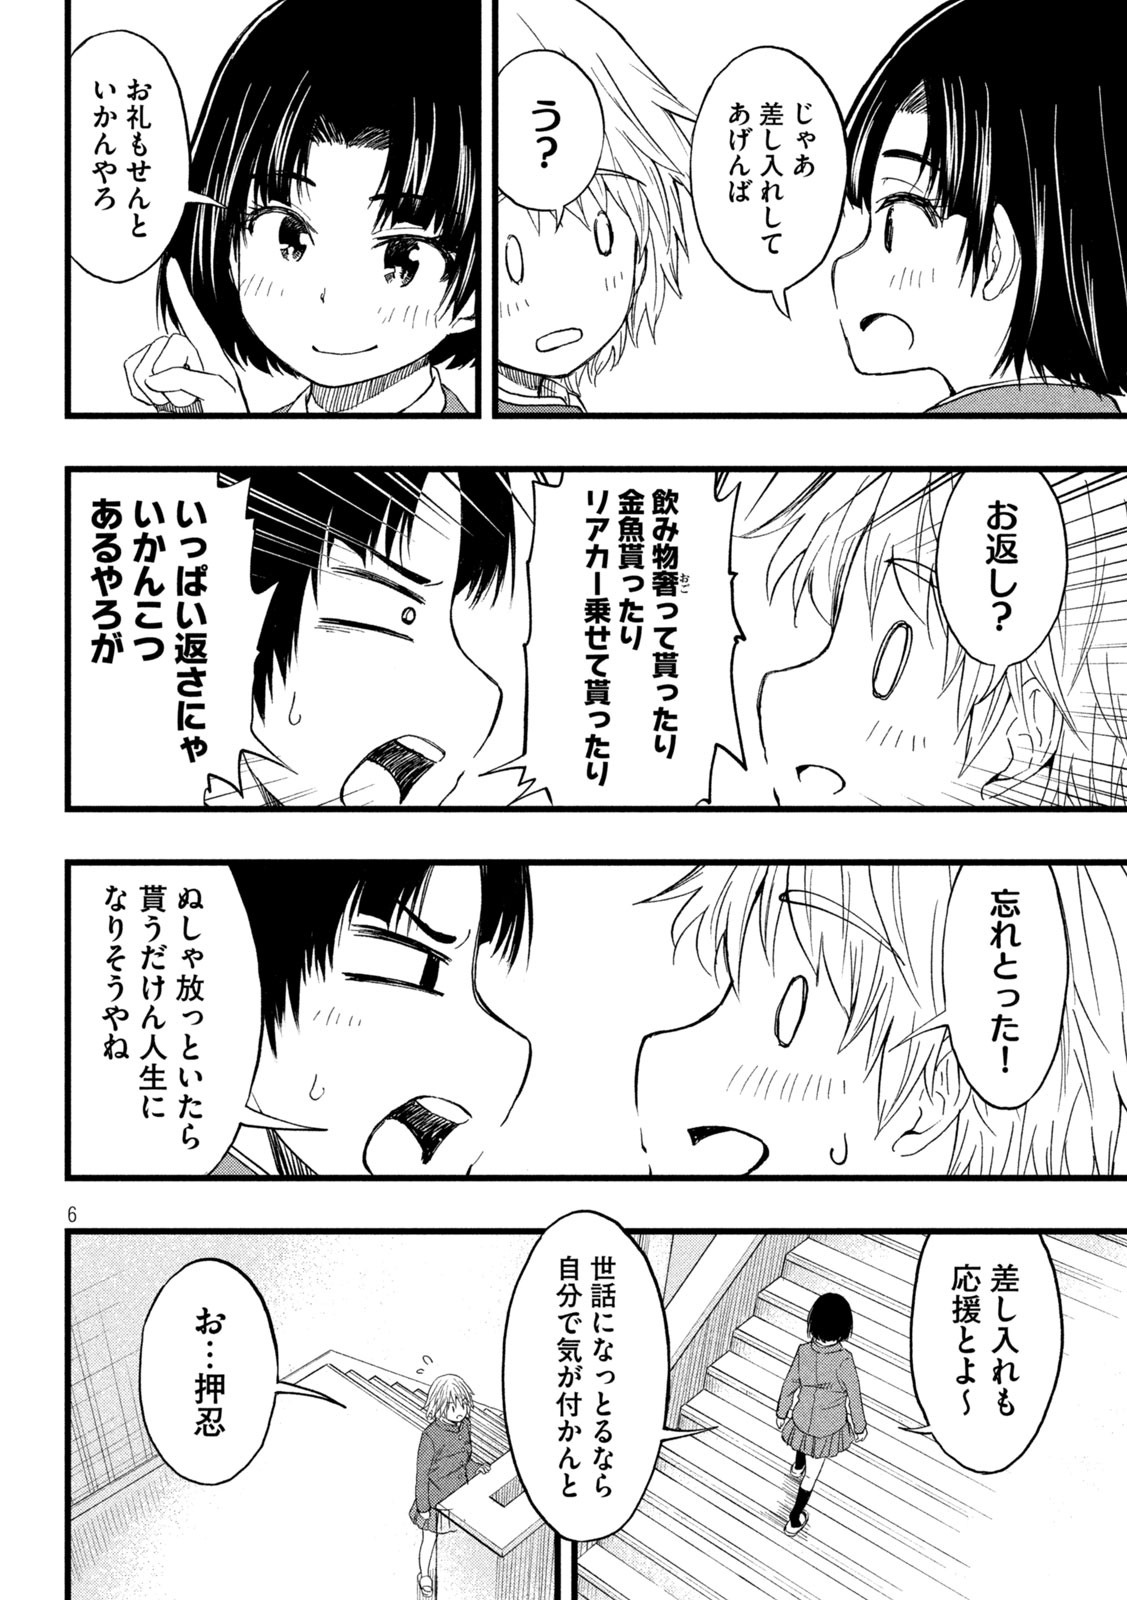 Koharu haru! - Chapter 58 - Page 2